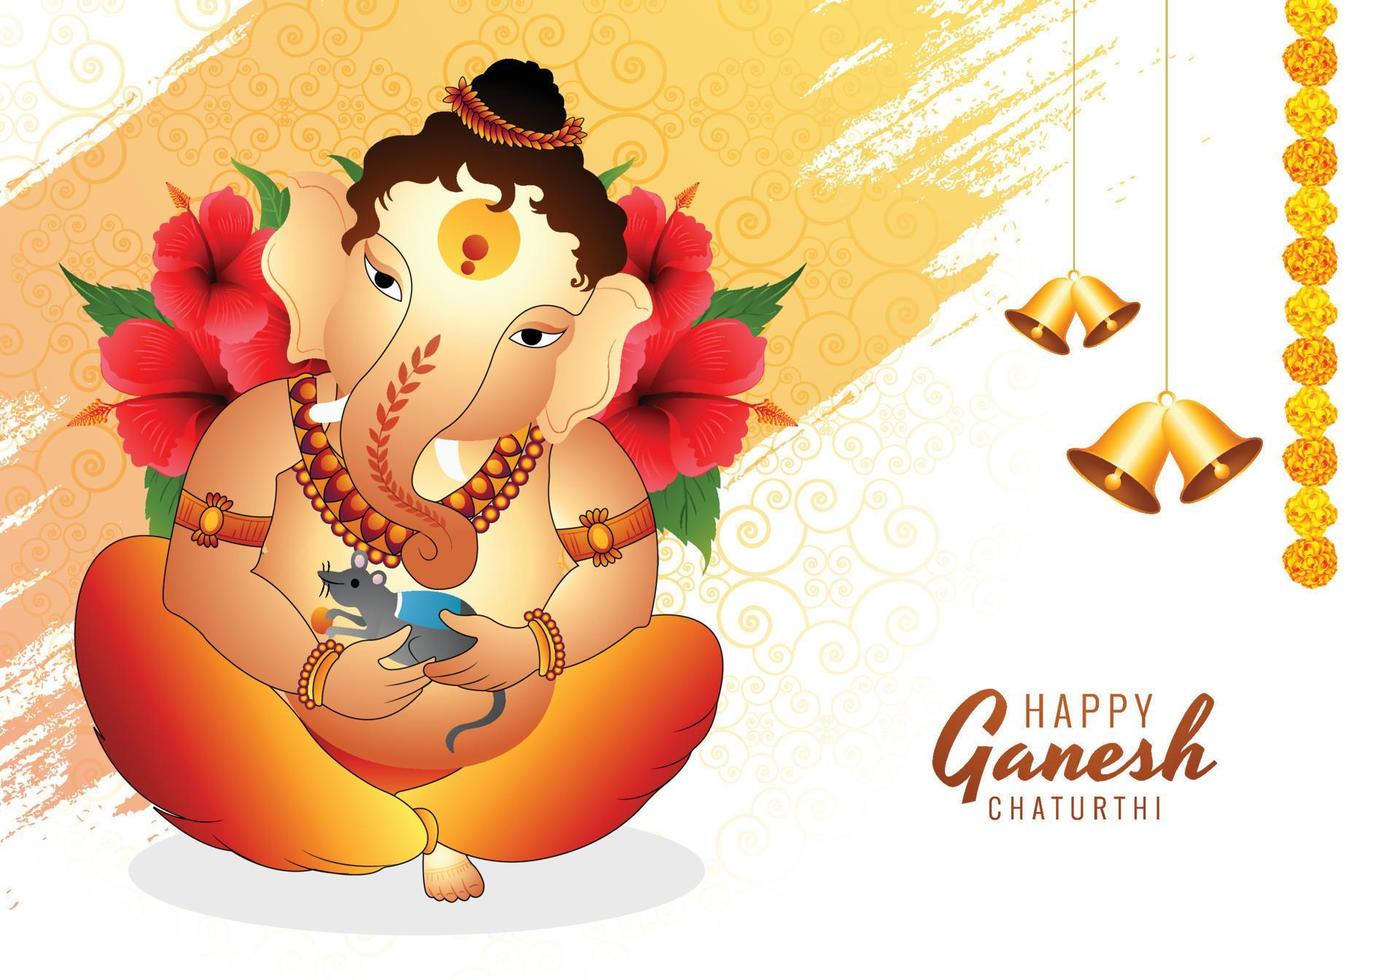 Hindu god lord ganesha festival holiday card background 10520464 ...